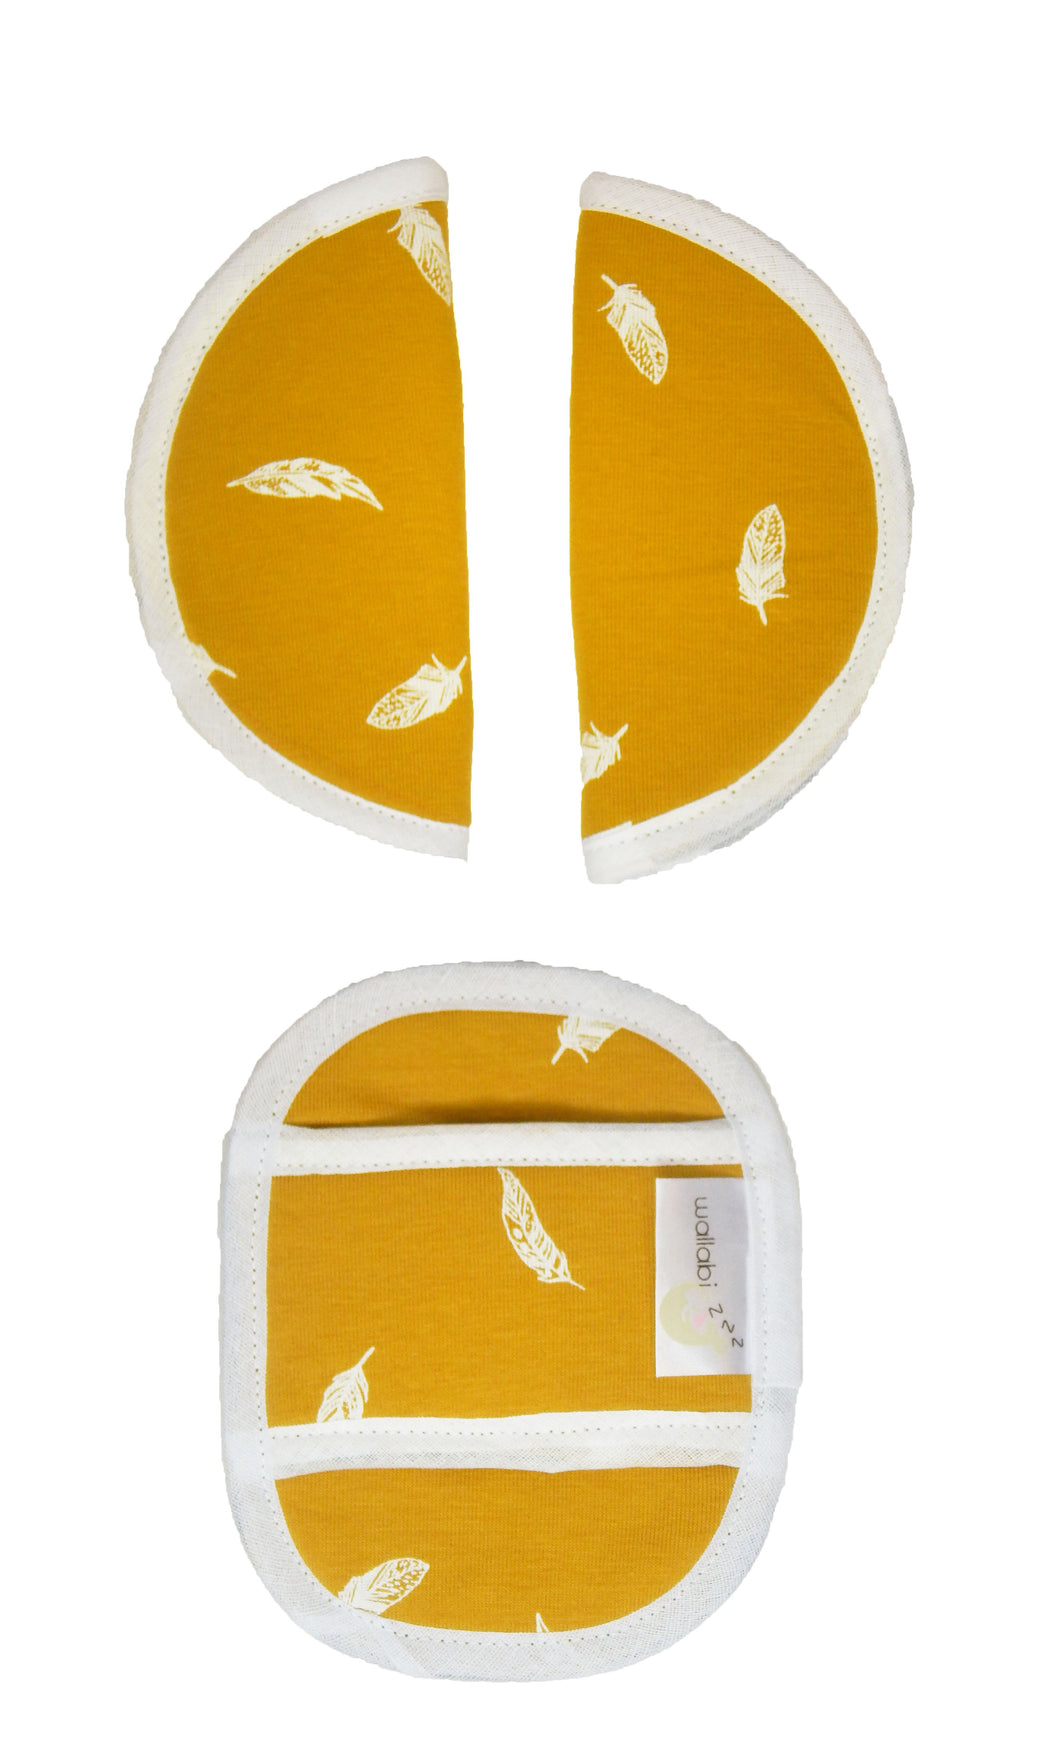 Maxi Cosi Seat Belt Pads - Yellow Ocher with White Feathers